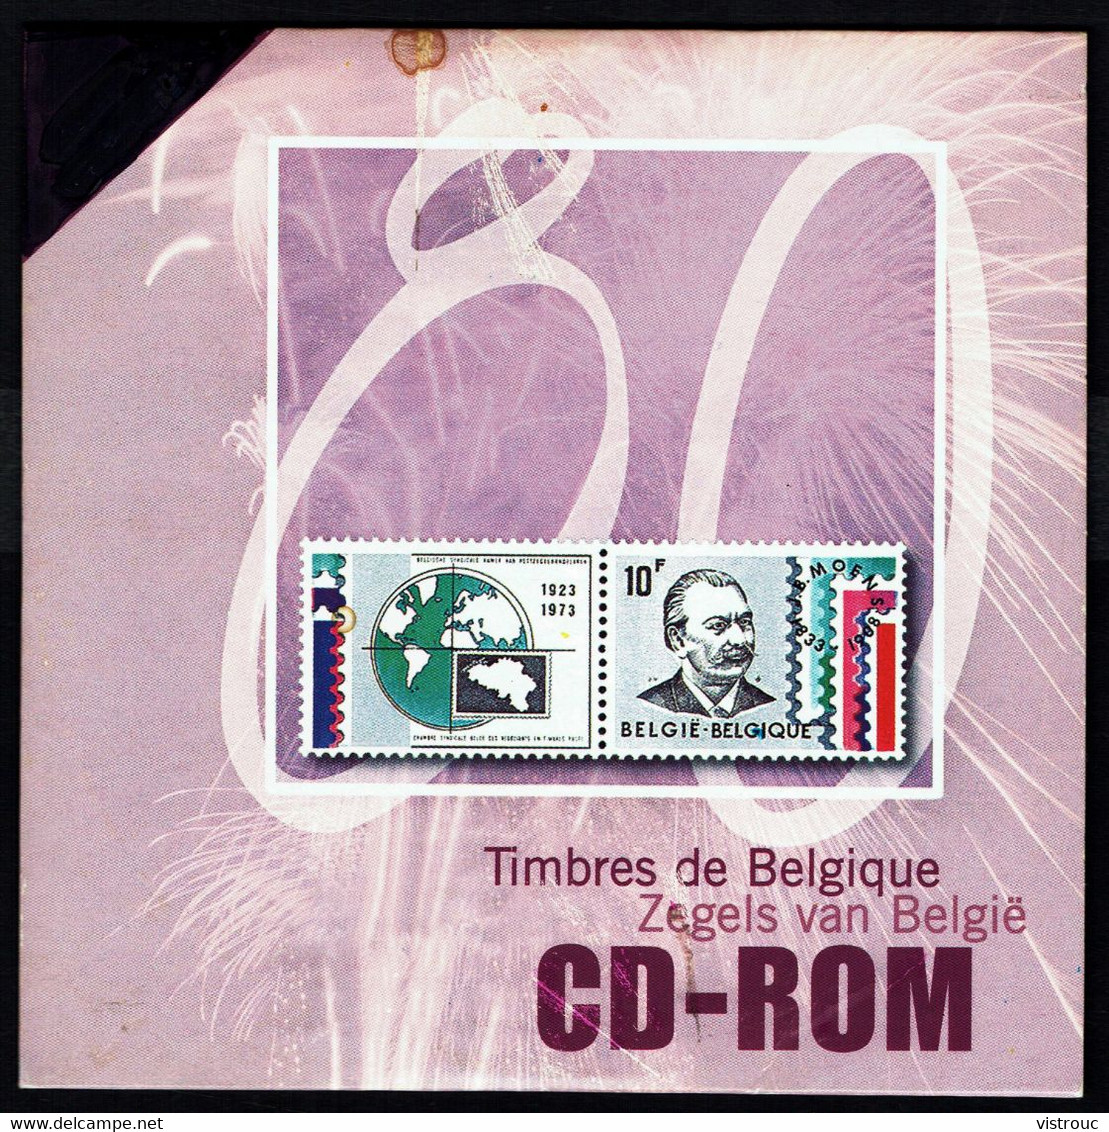 CD ROM "TIMBRES DE BELGIQUE". - French